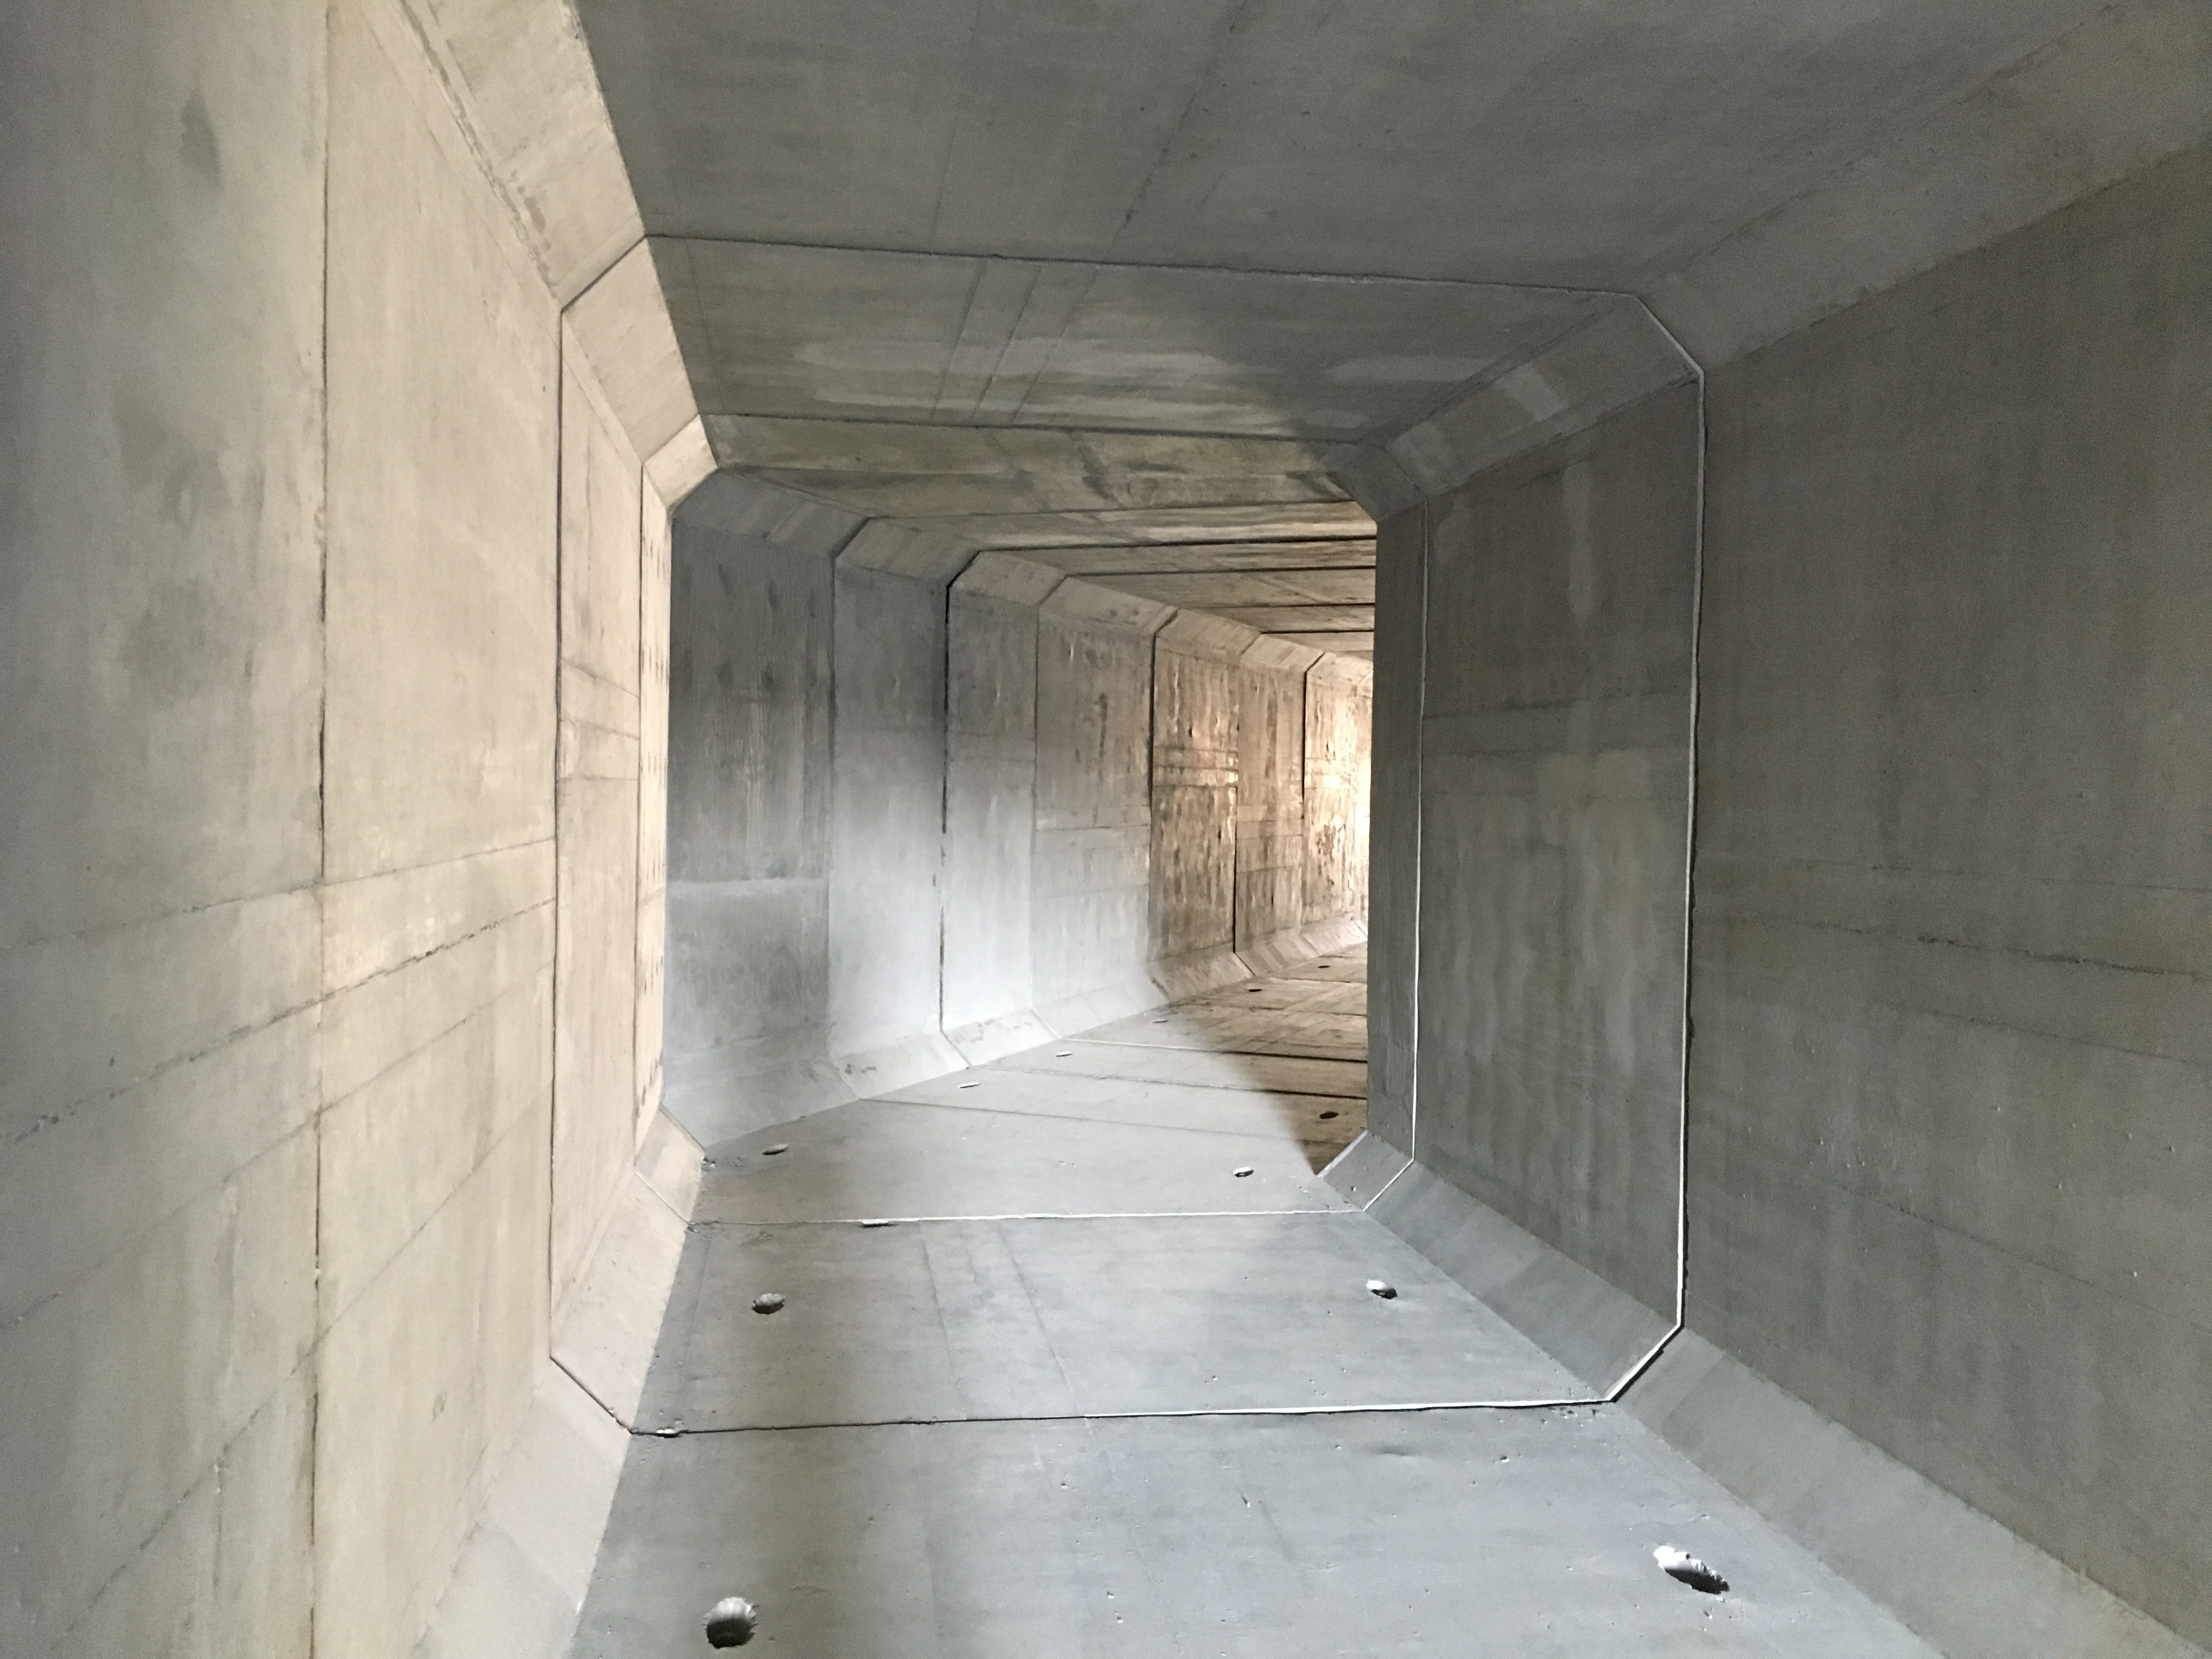 Precast Box Culvert System Used for New Pedestrian Tunnel Installed at Richmond Raceway4032 x 3024